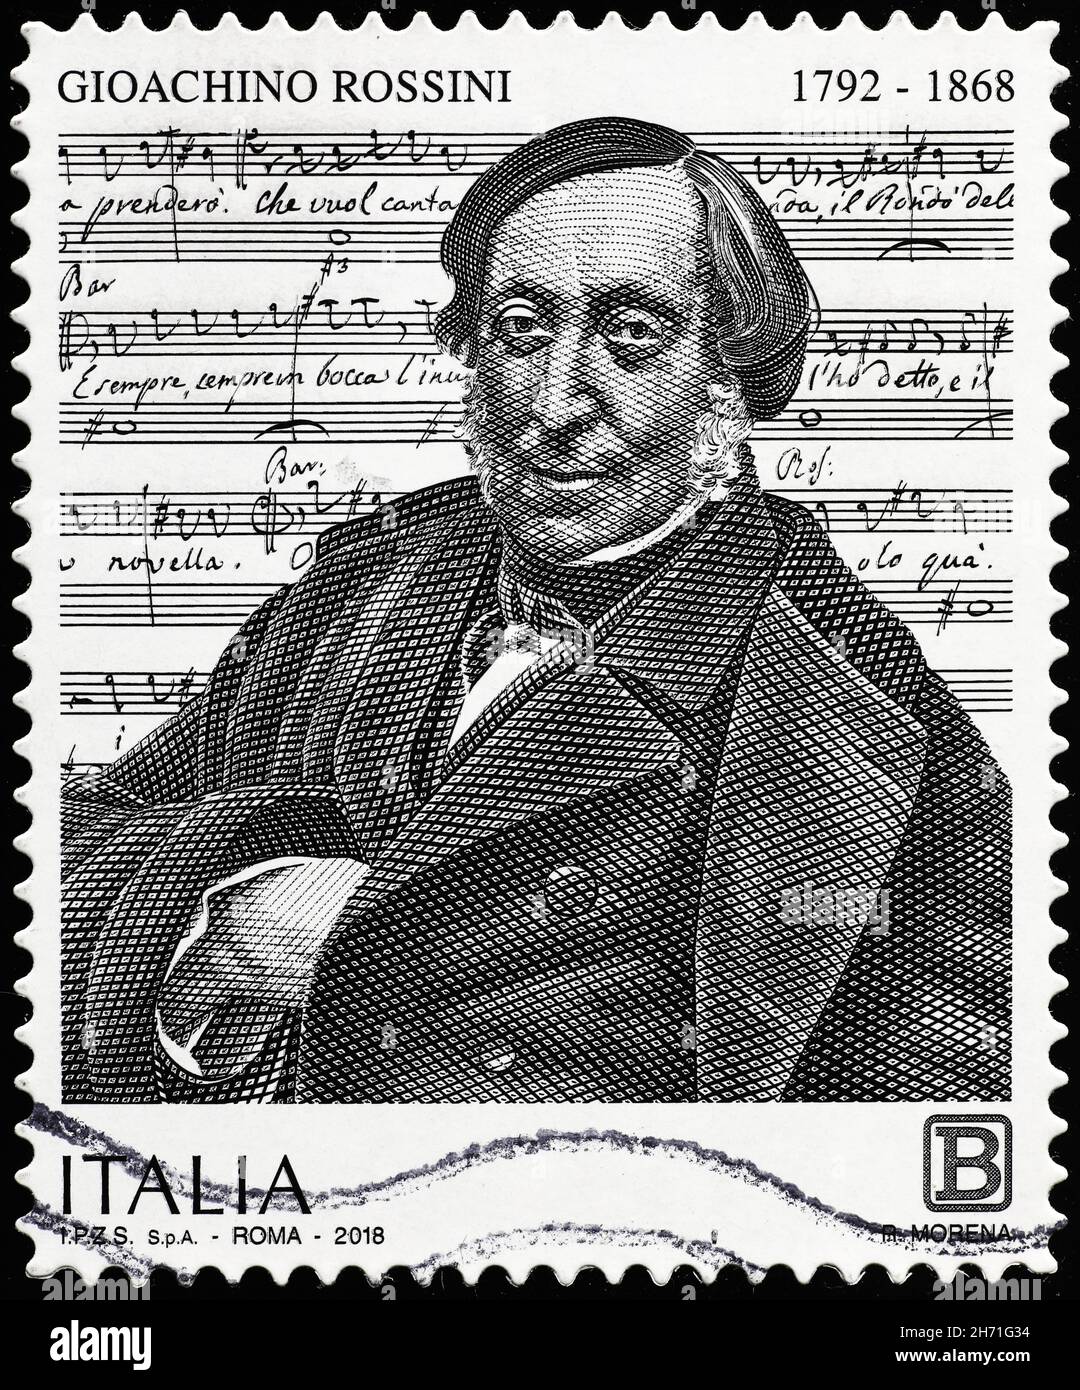 Gioacchino Rossini on italian postage stamp Stock Photo